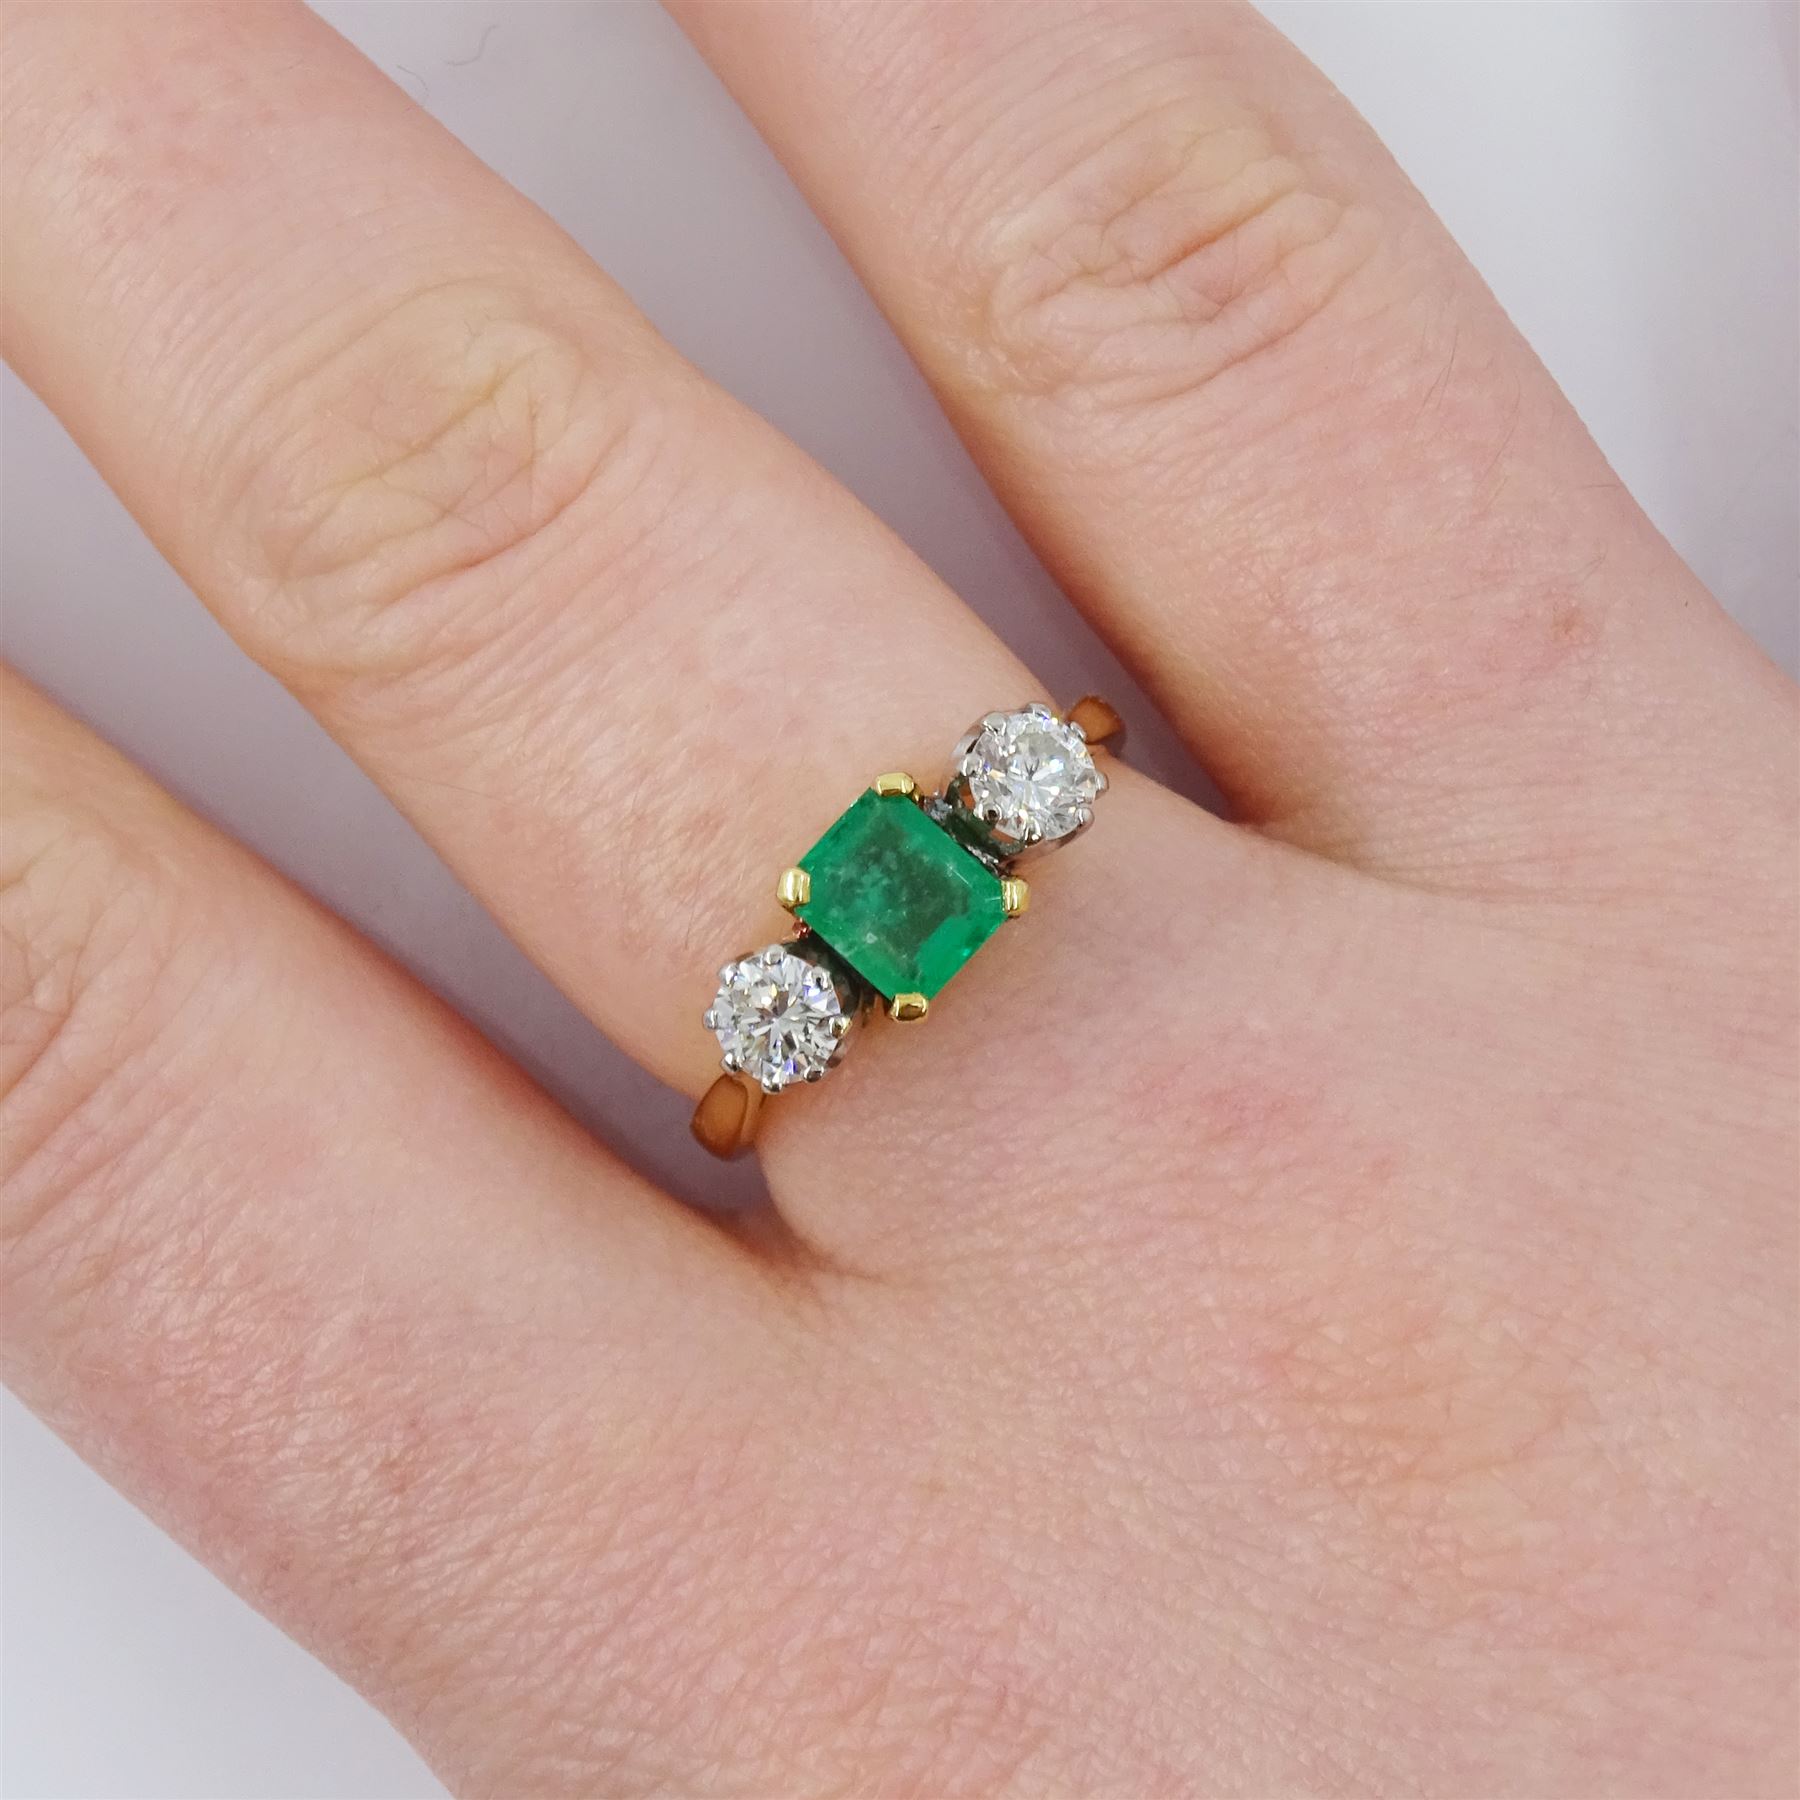 18ct gold three stone emerald and round brilliant cut diamond ring - Image 2 of 4